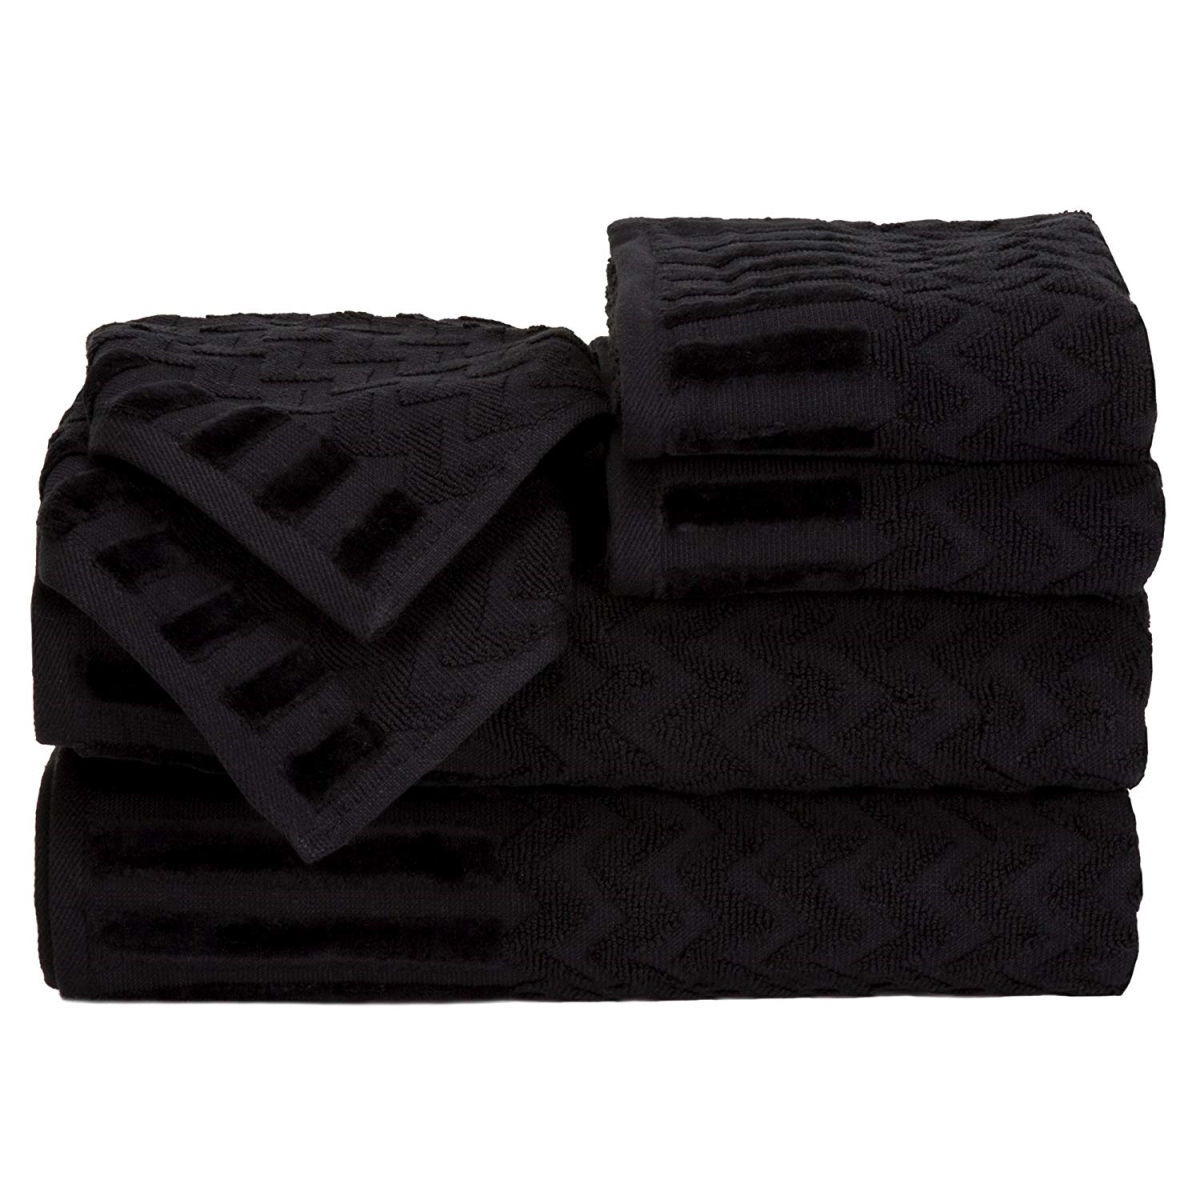 Picture of Bedford Home 67A-27544 6 Piece Cotton Deluxe Plush Bath Towel Set - Black